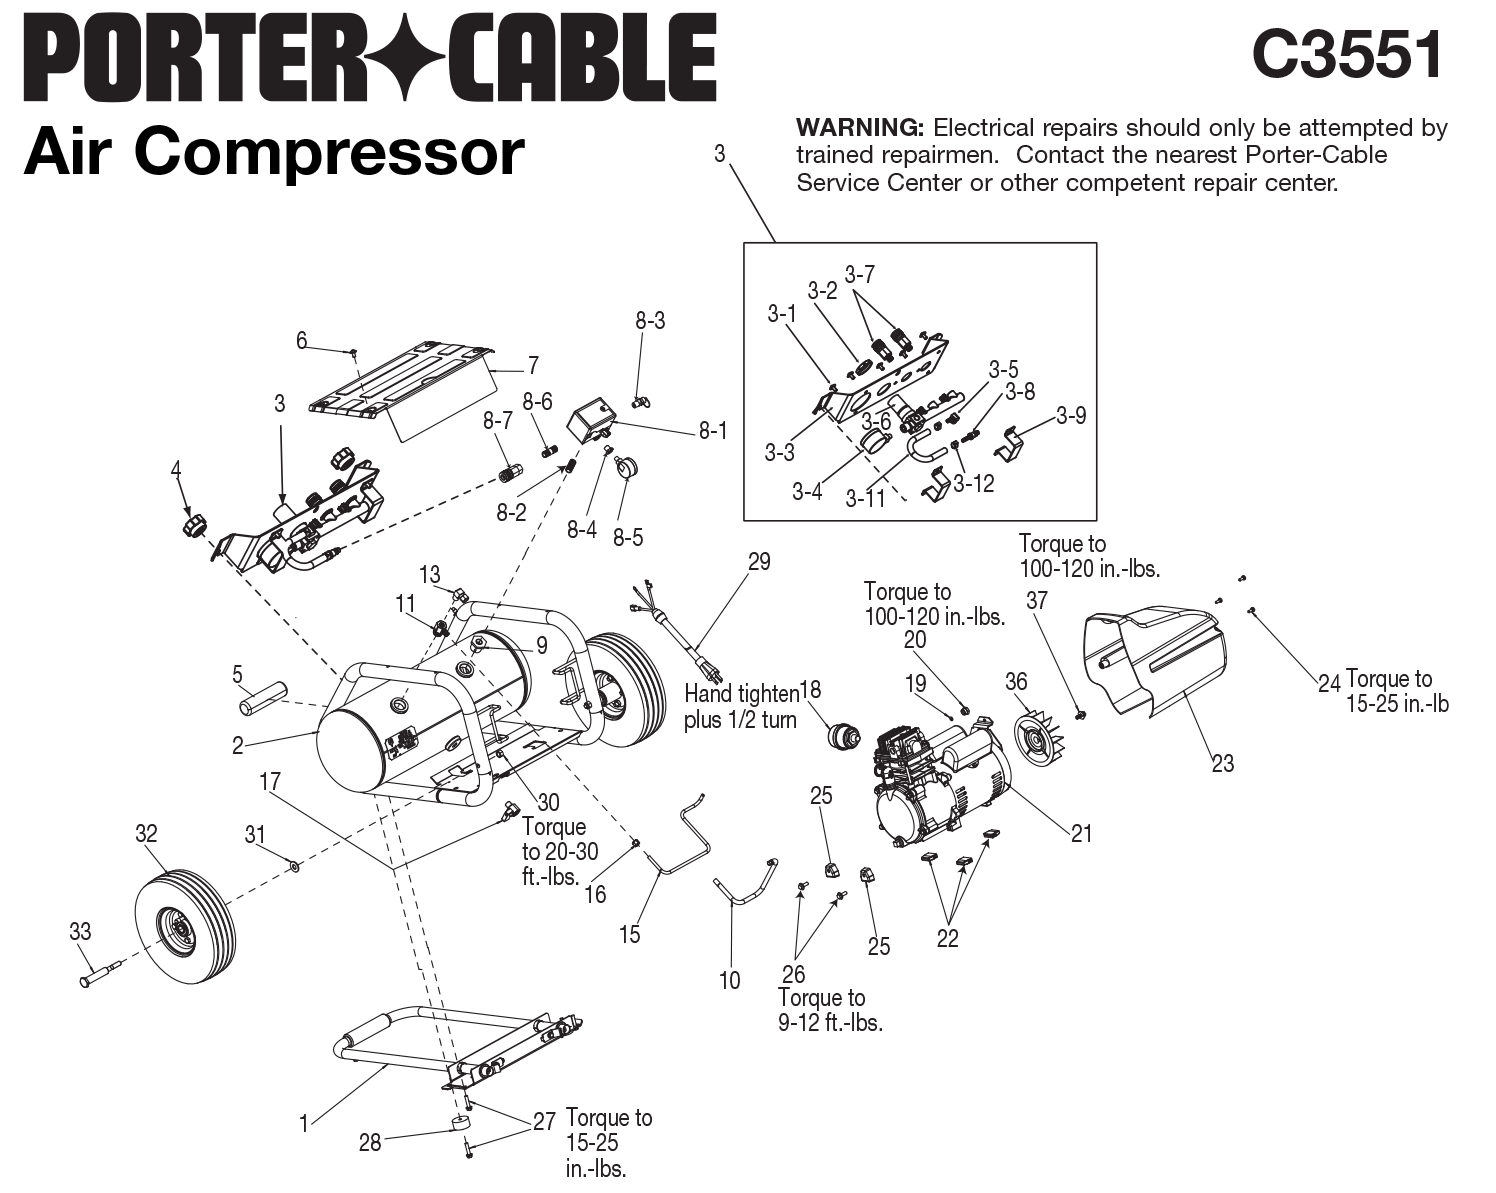 PorterCable C3551 4.5 Gallon 150 Psi Portable Air Compressor Model